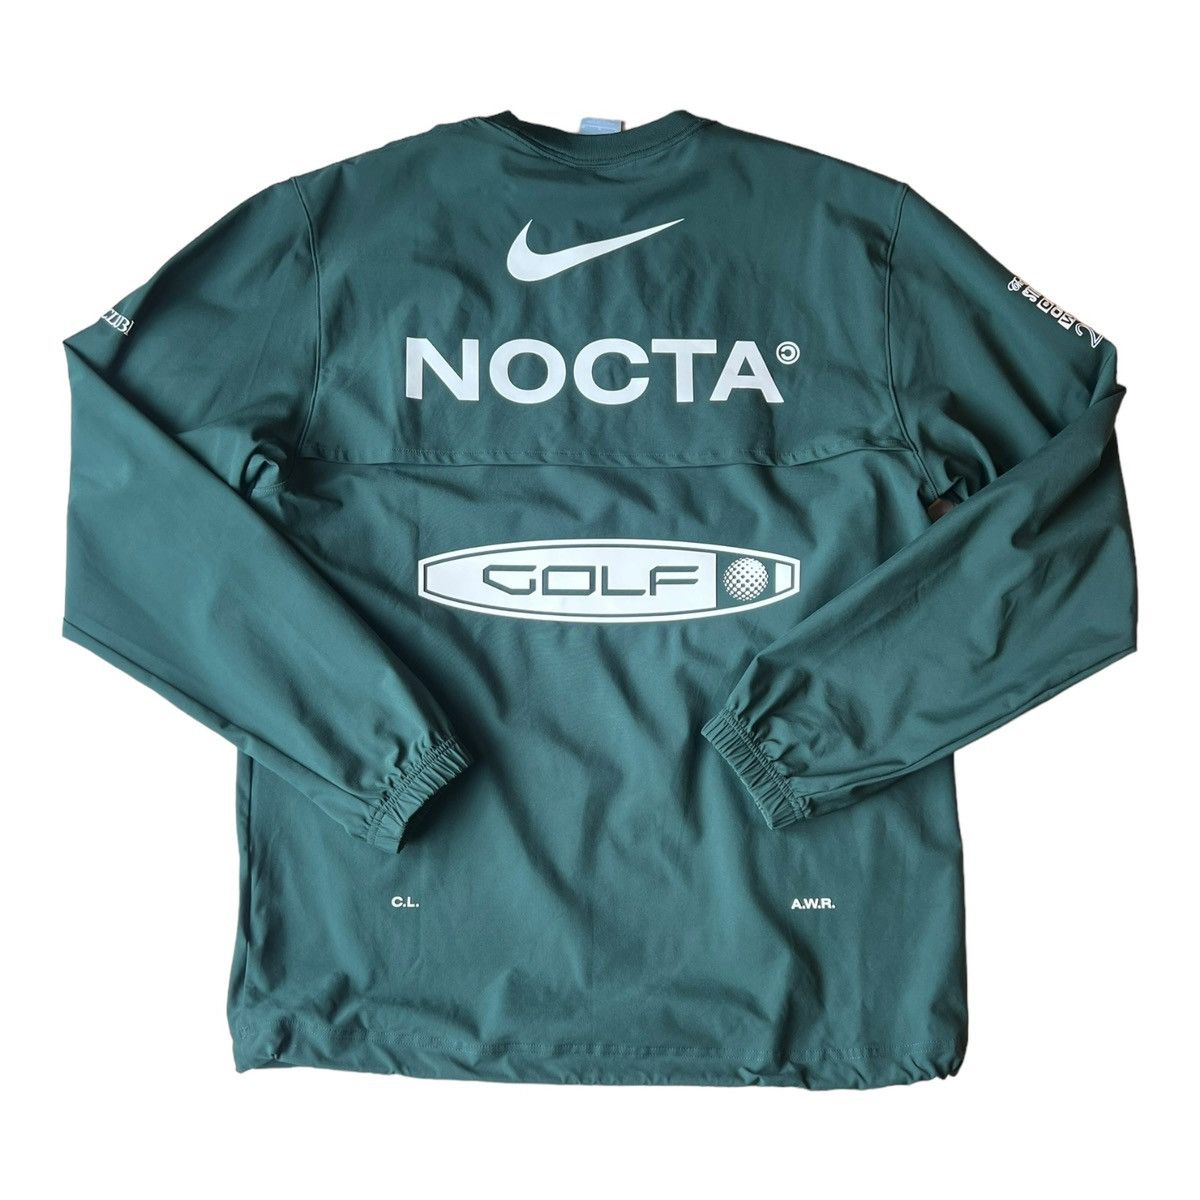 Nike Nike NOCTA Drake Golf Crewneck Top Size Medium | Grailed